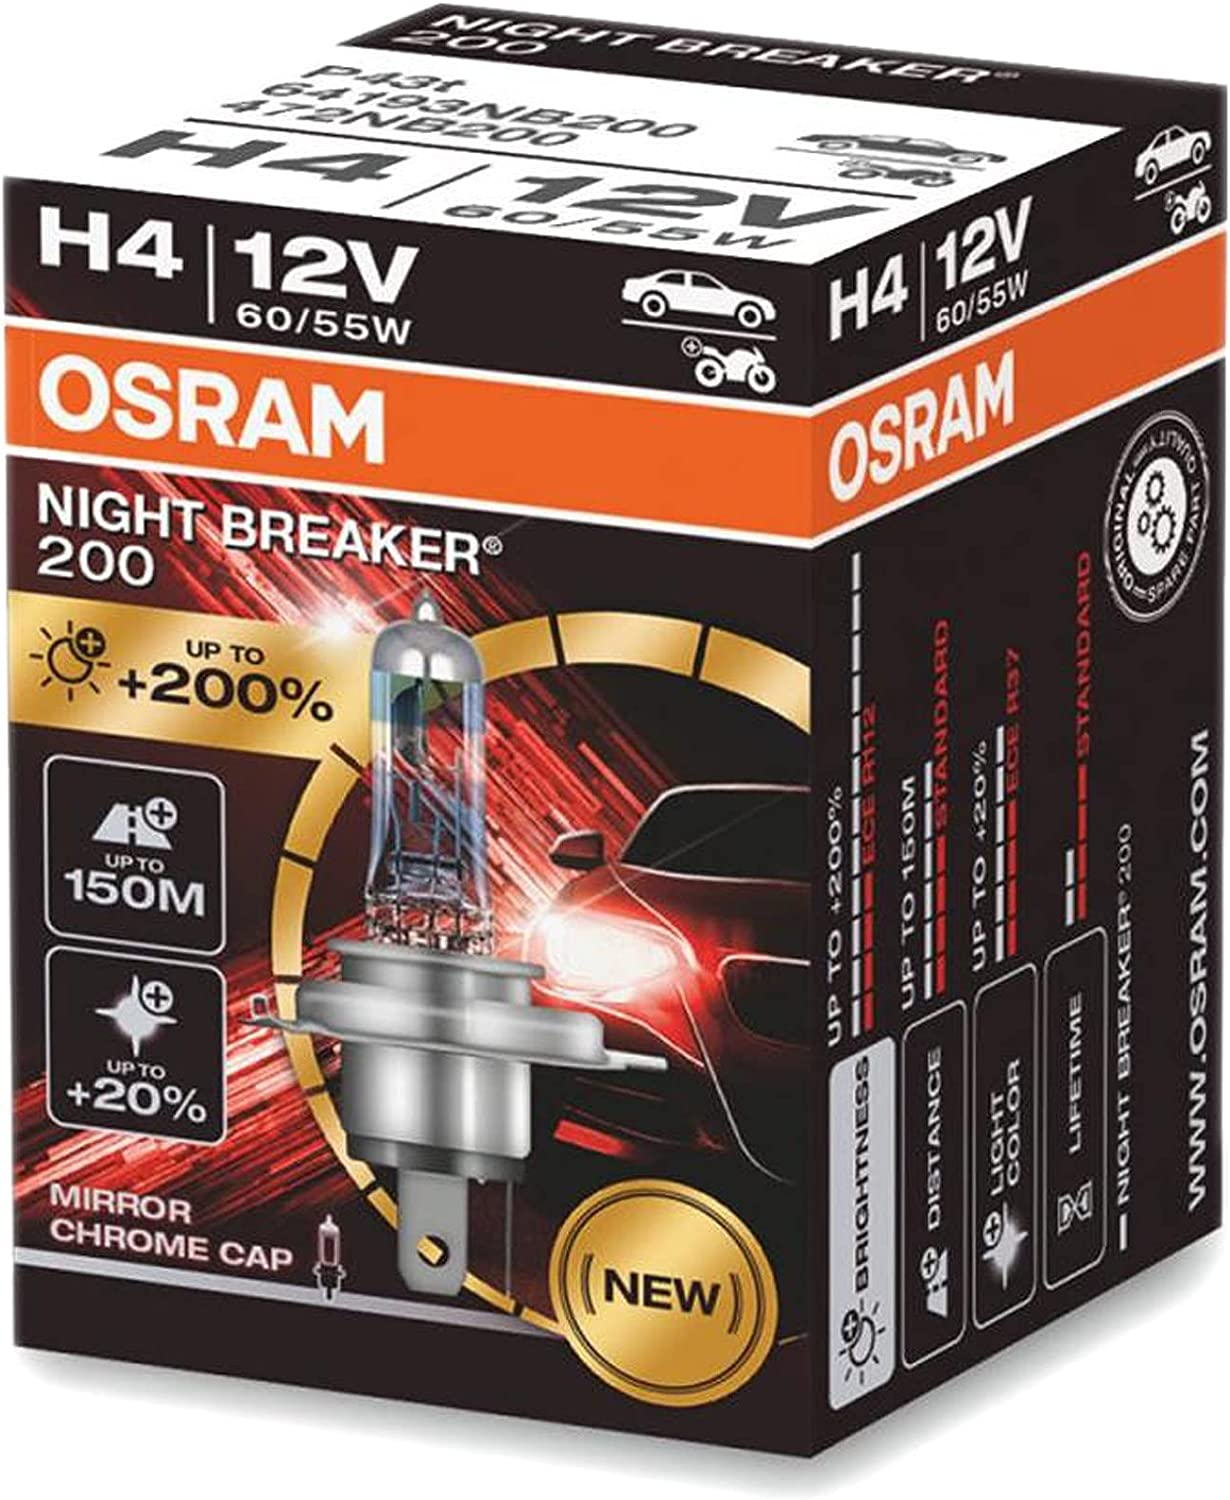 OSRAM 64210NB200-HCB Nightbreaker 200 H7 Car Headlight Bulb for sale online